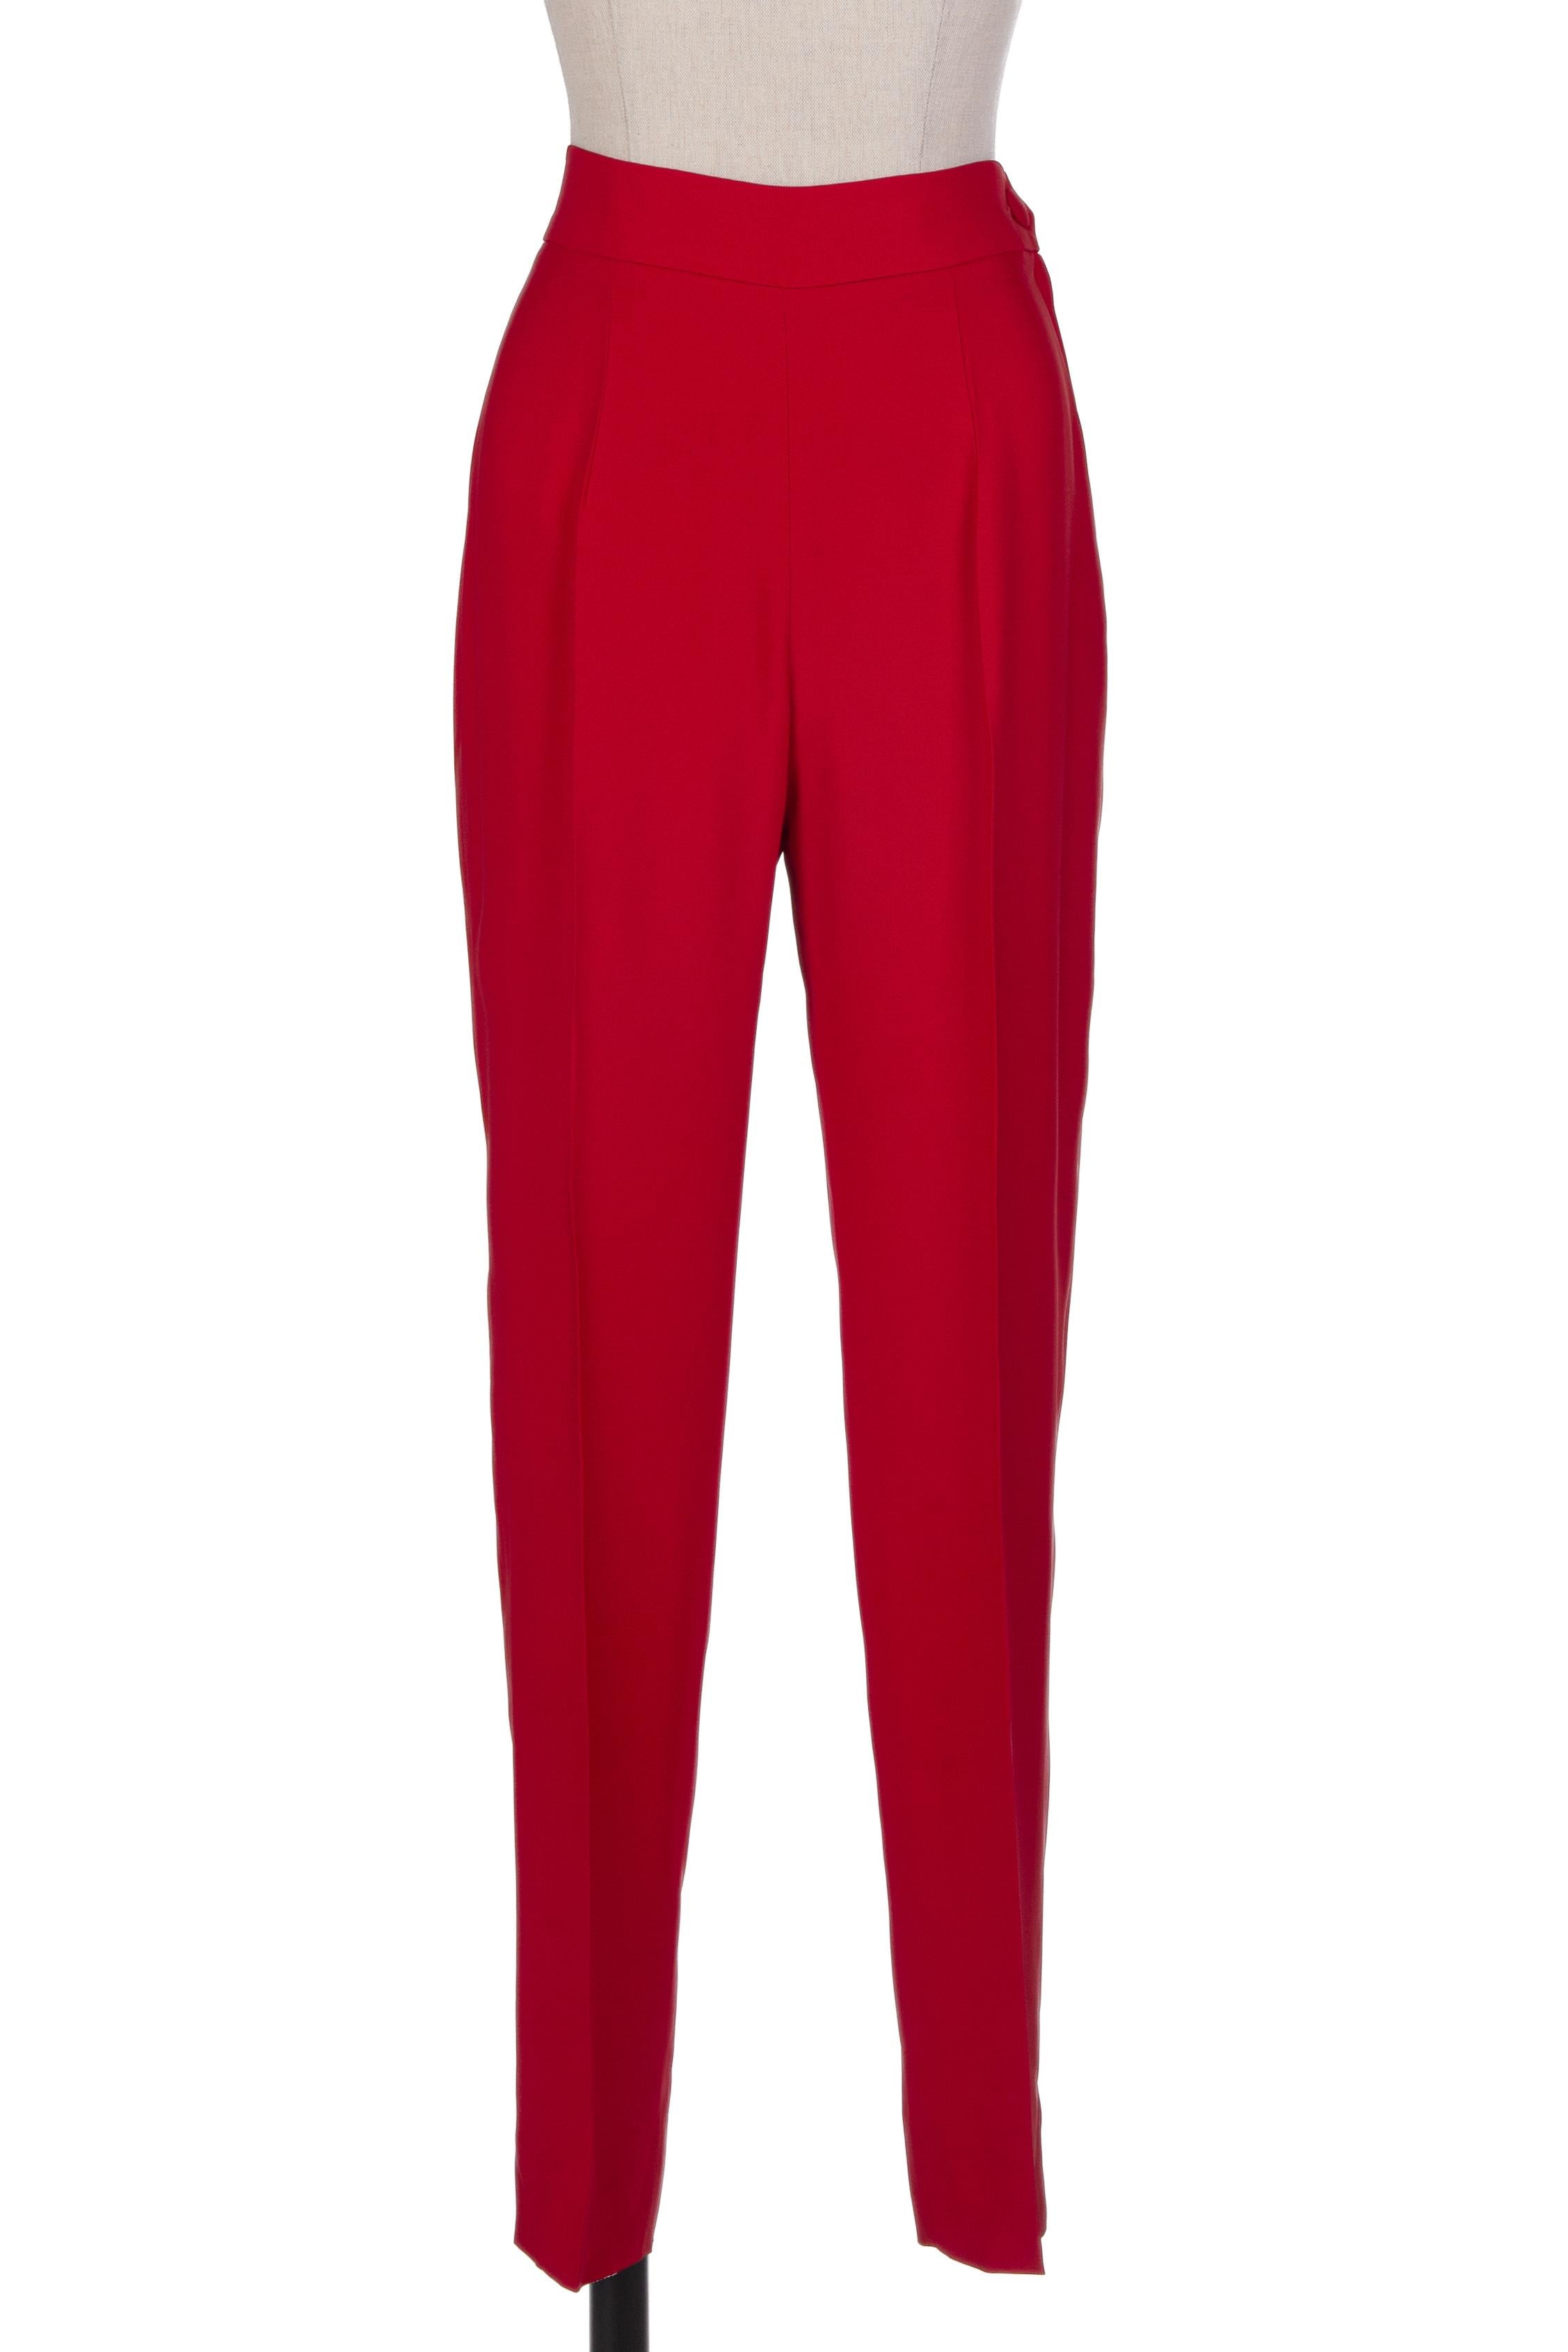 1989 MOSCHINO COUTURE Red I Love Venice Lion Appliquéd Jacket & Pant Suit For Sale 4